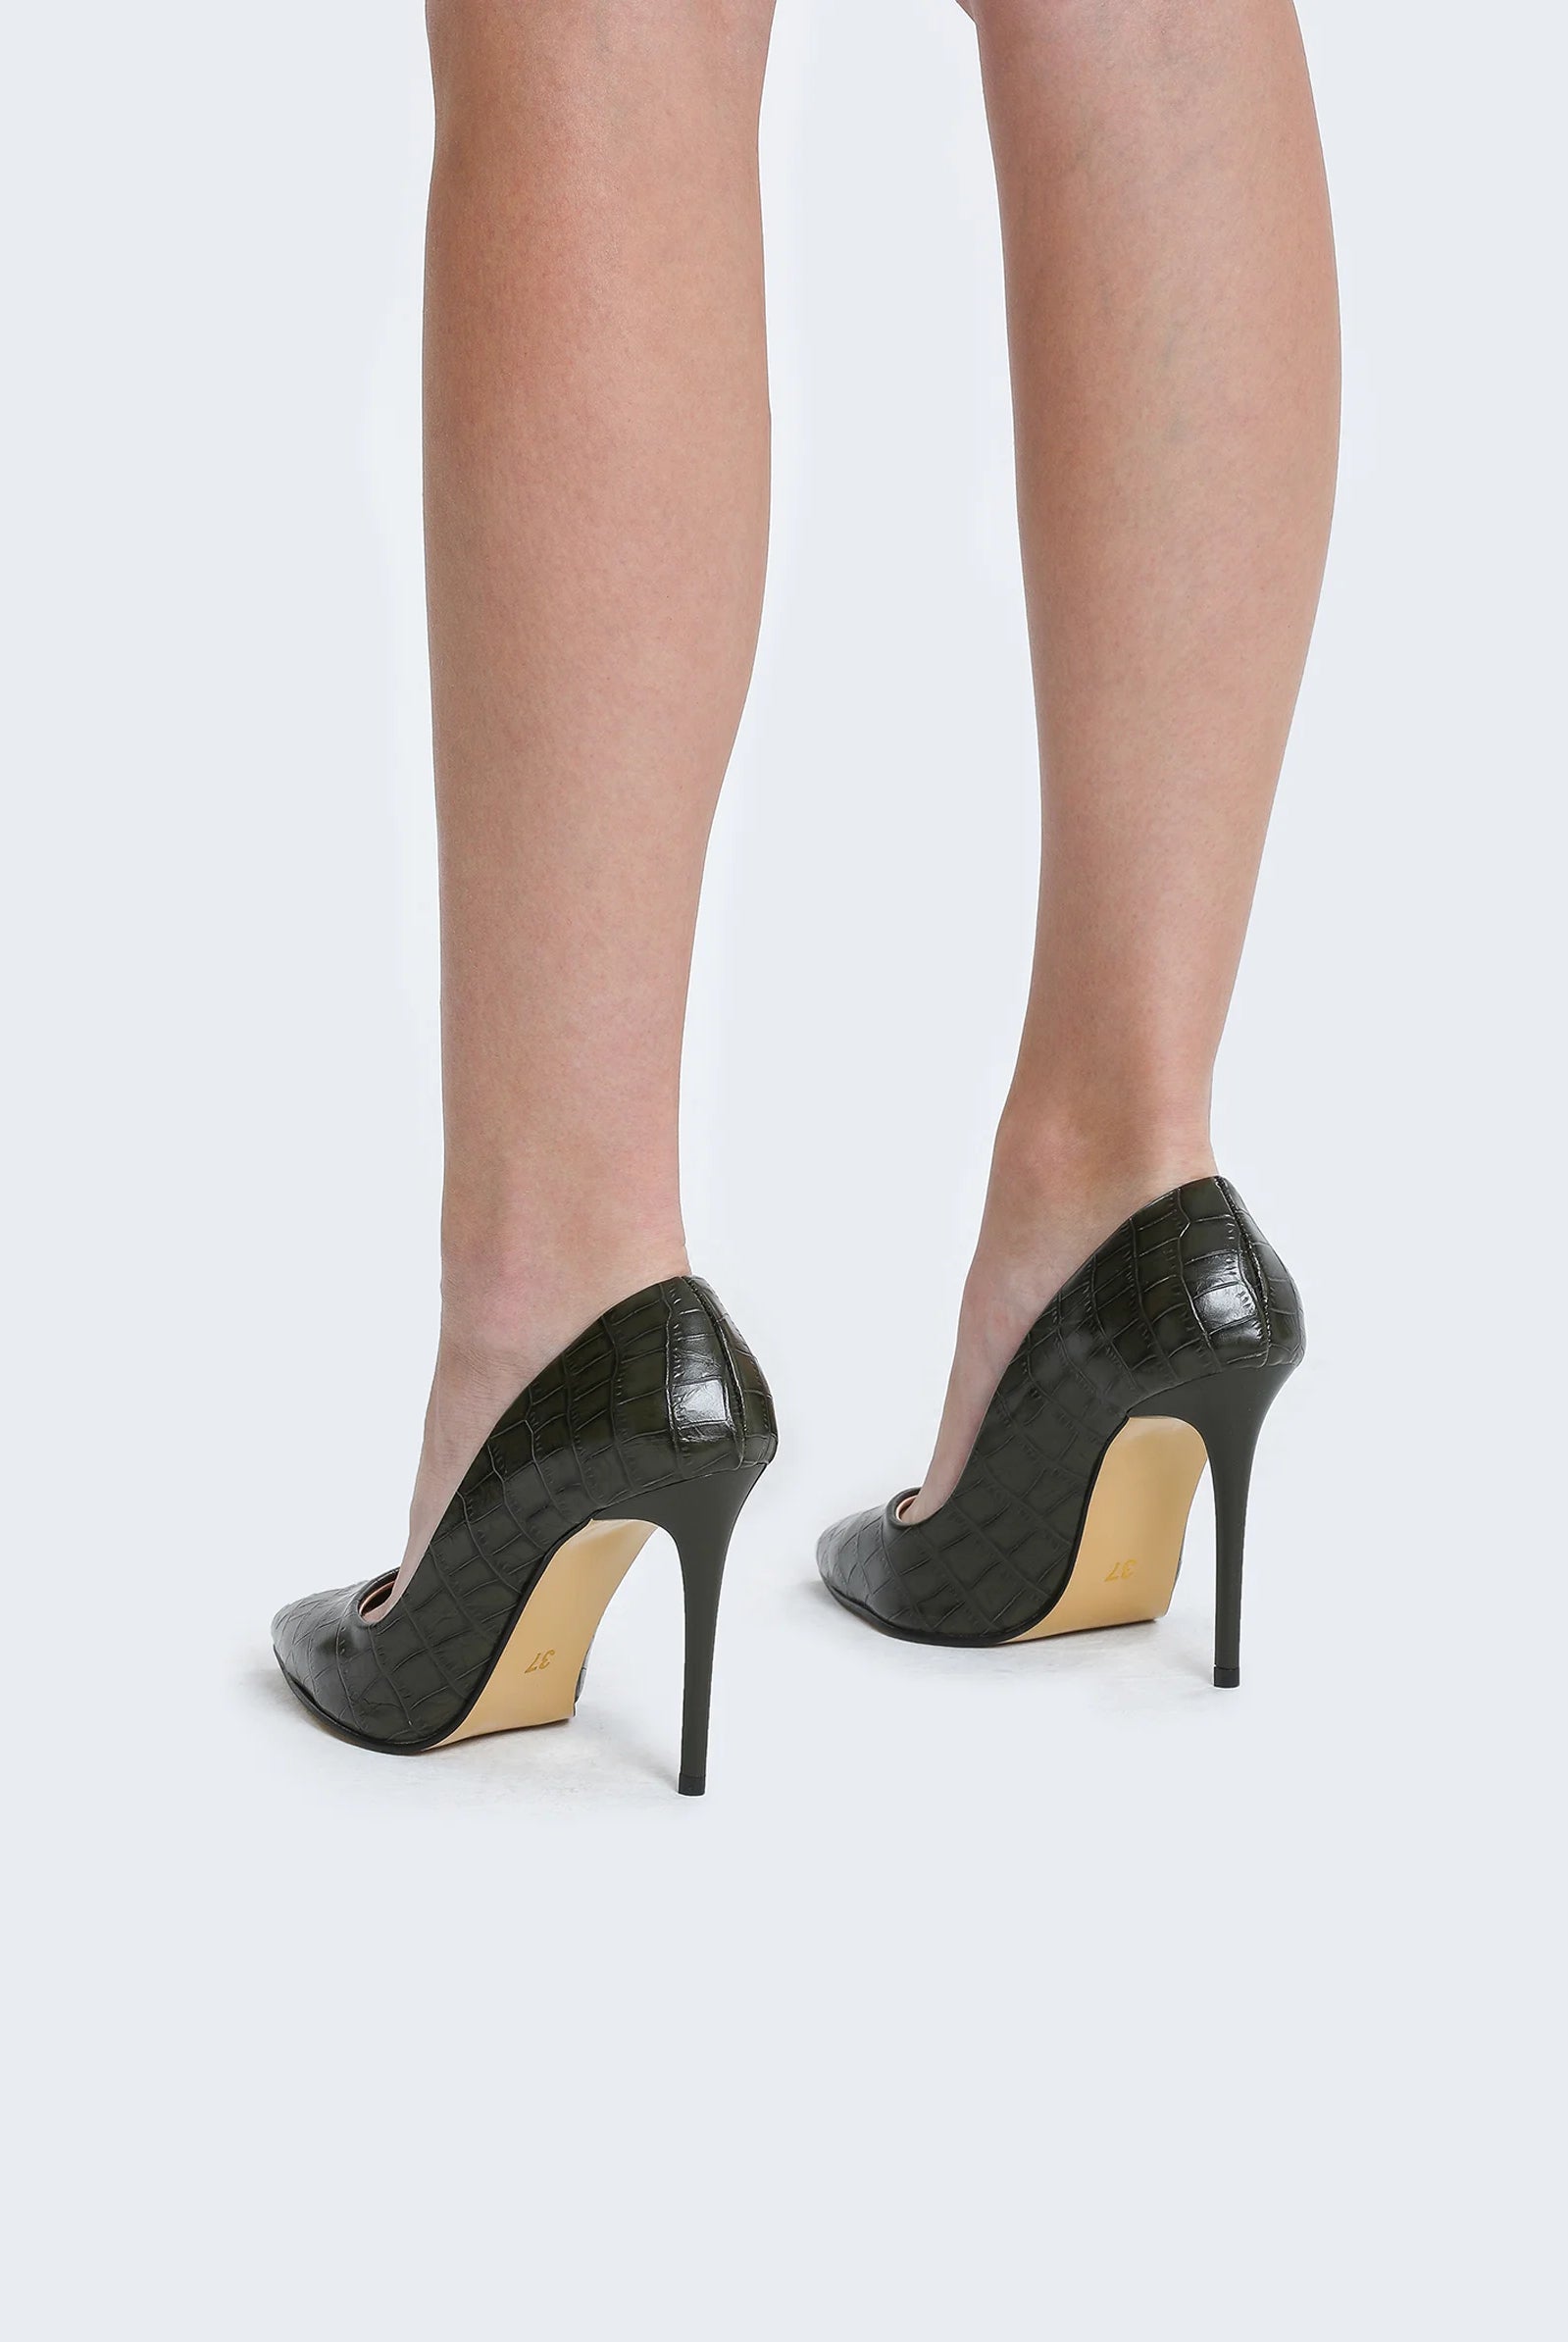 snakeskin block heels